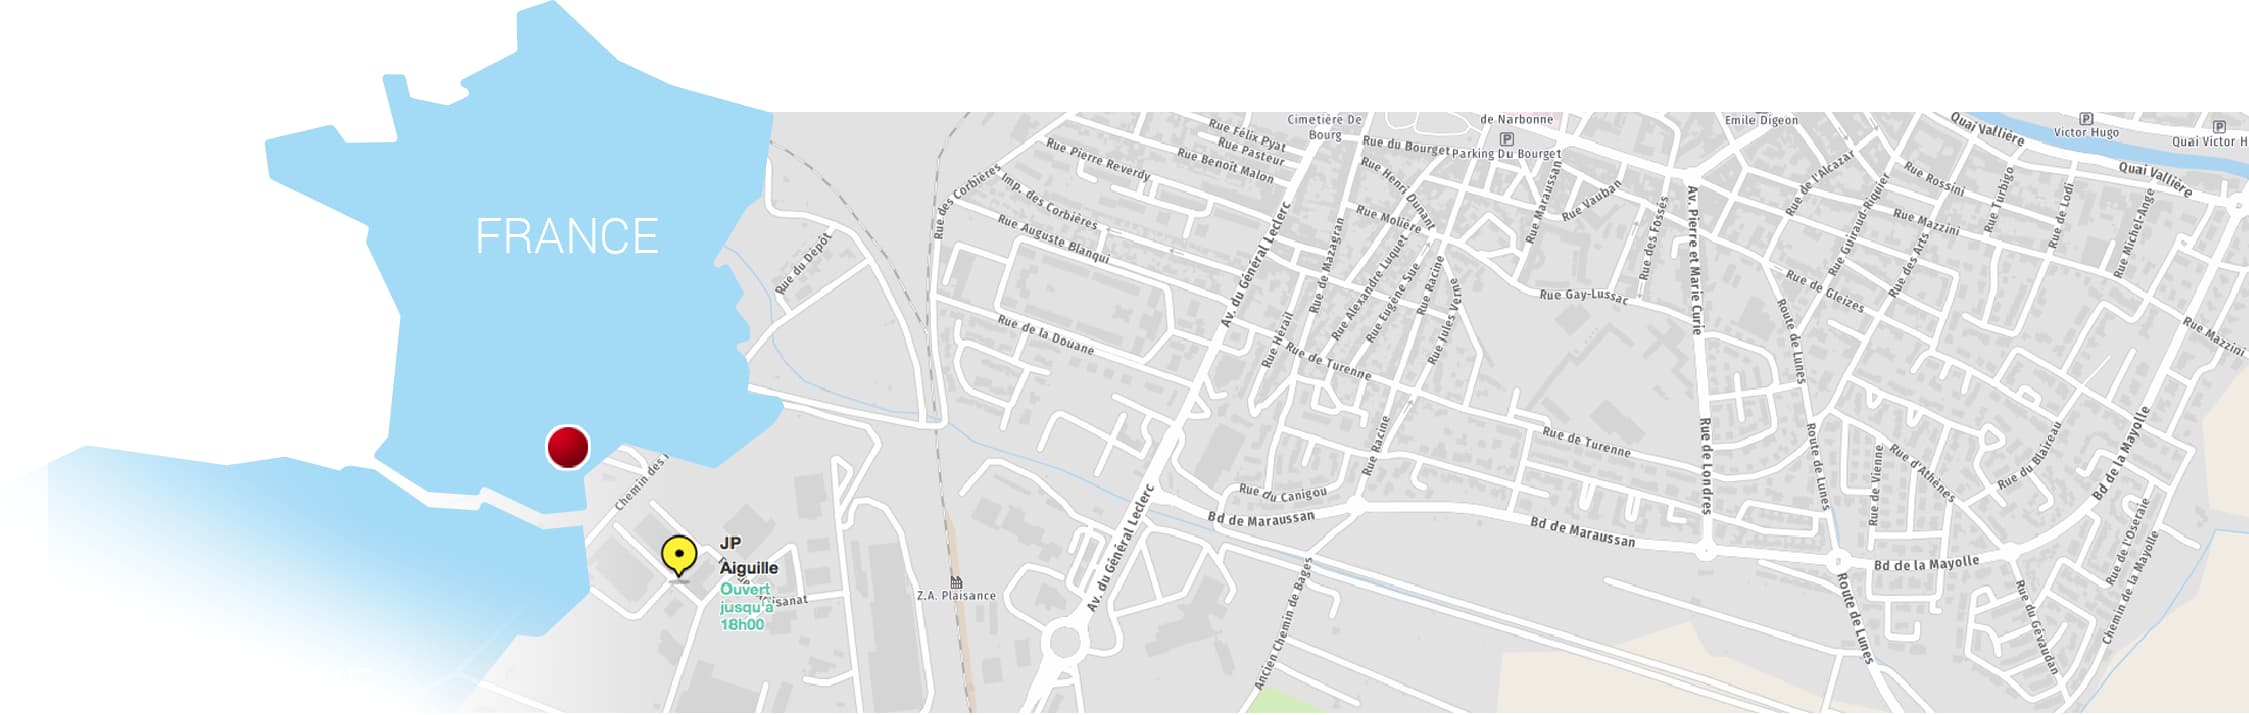 Aiguille - Carte Google Maps